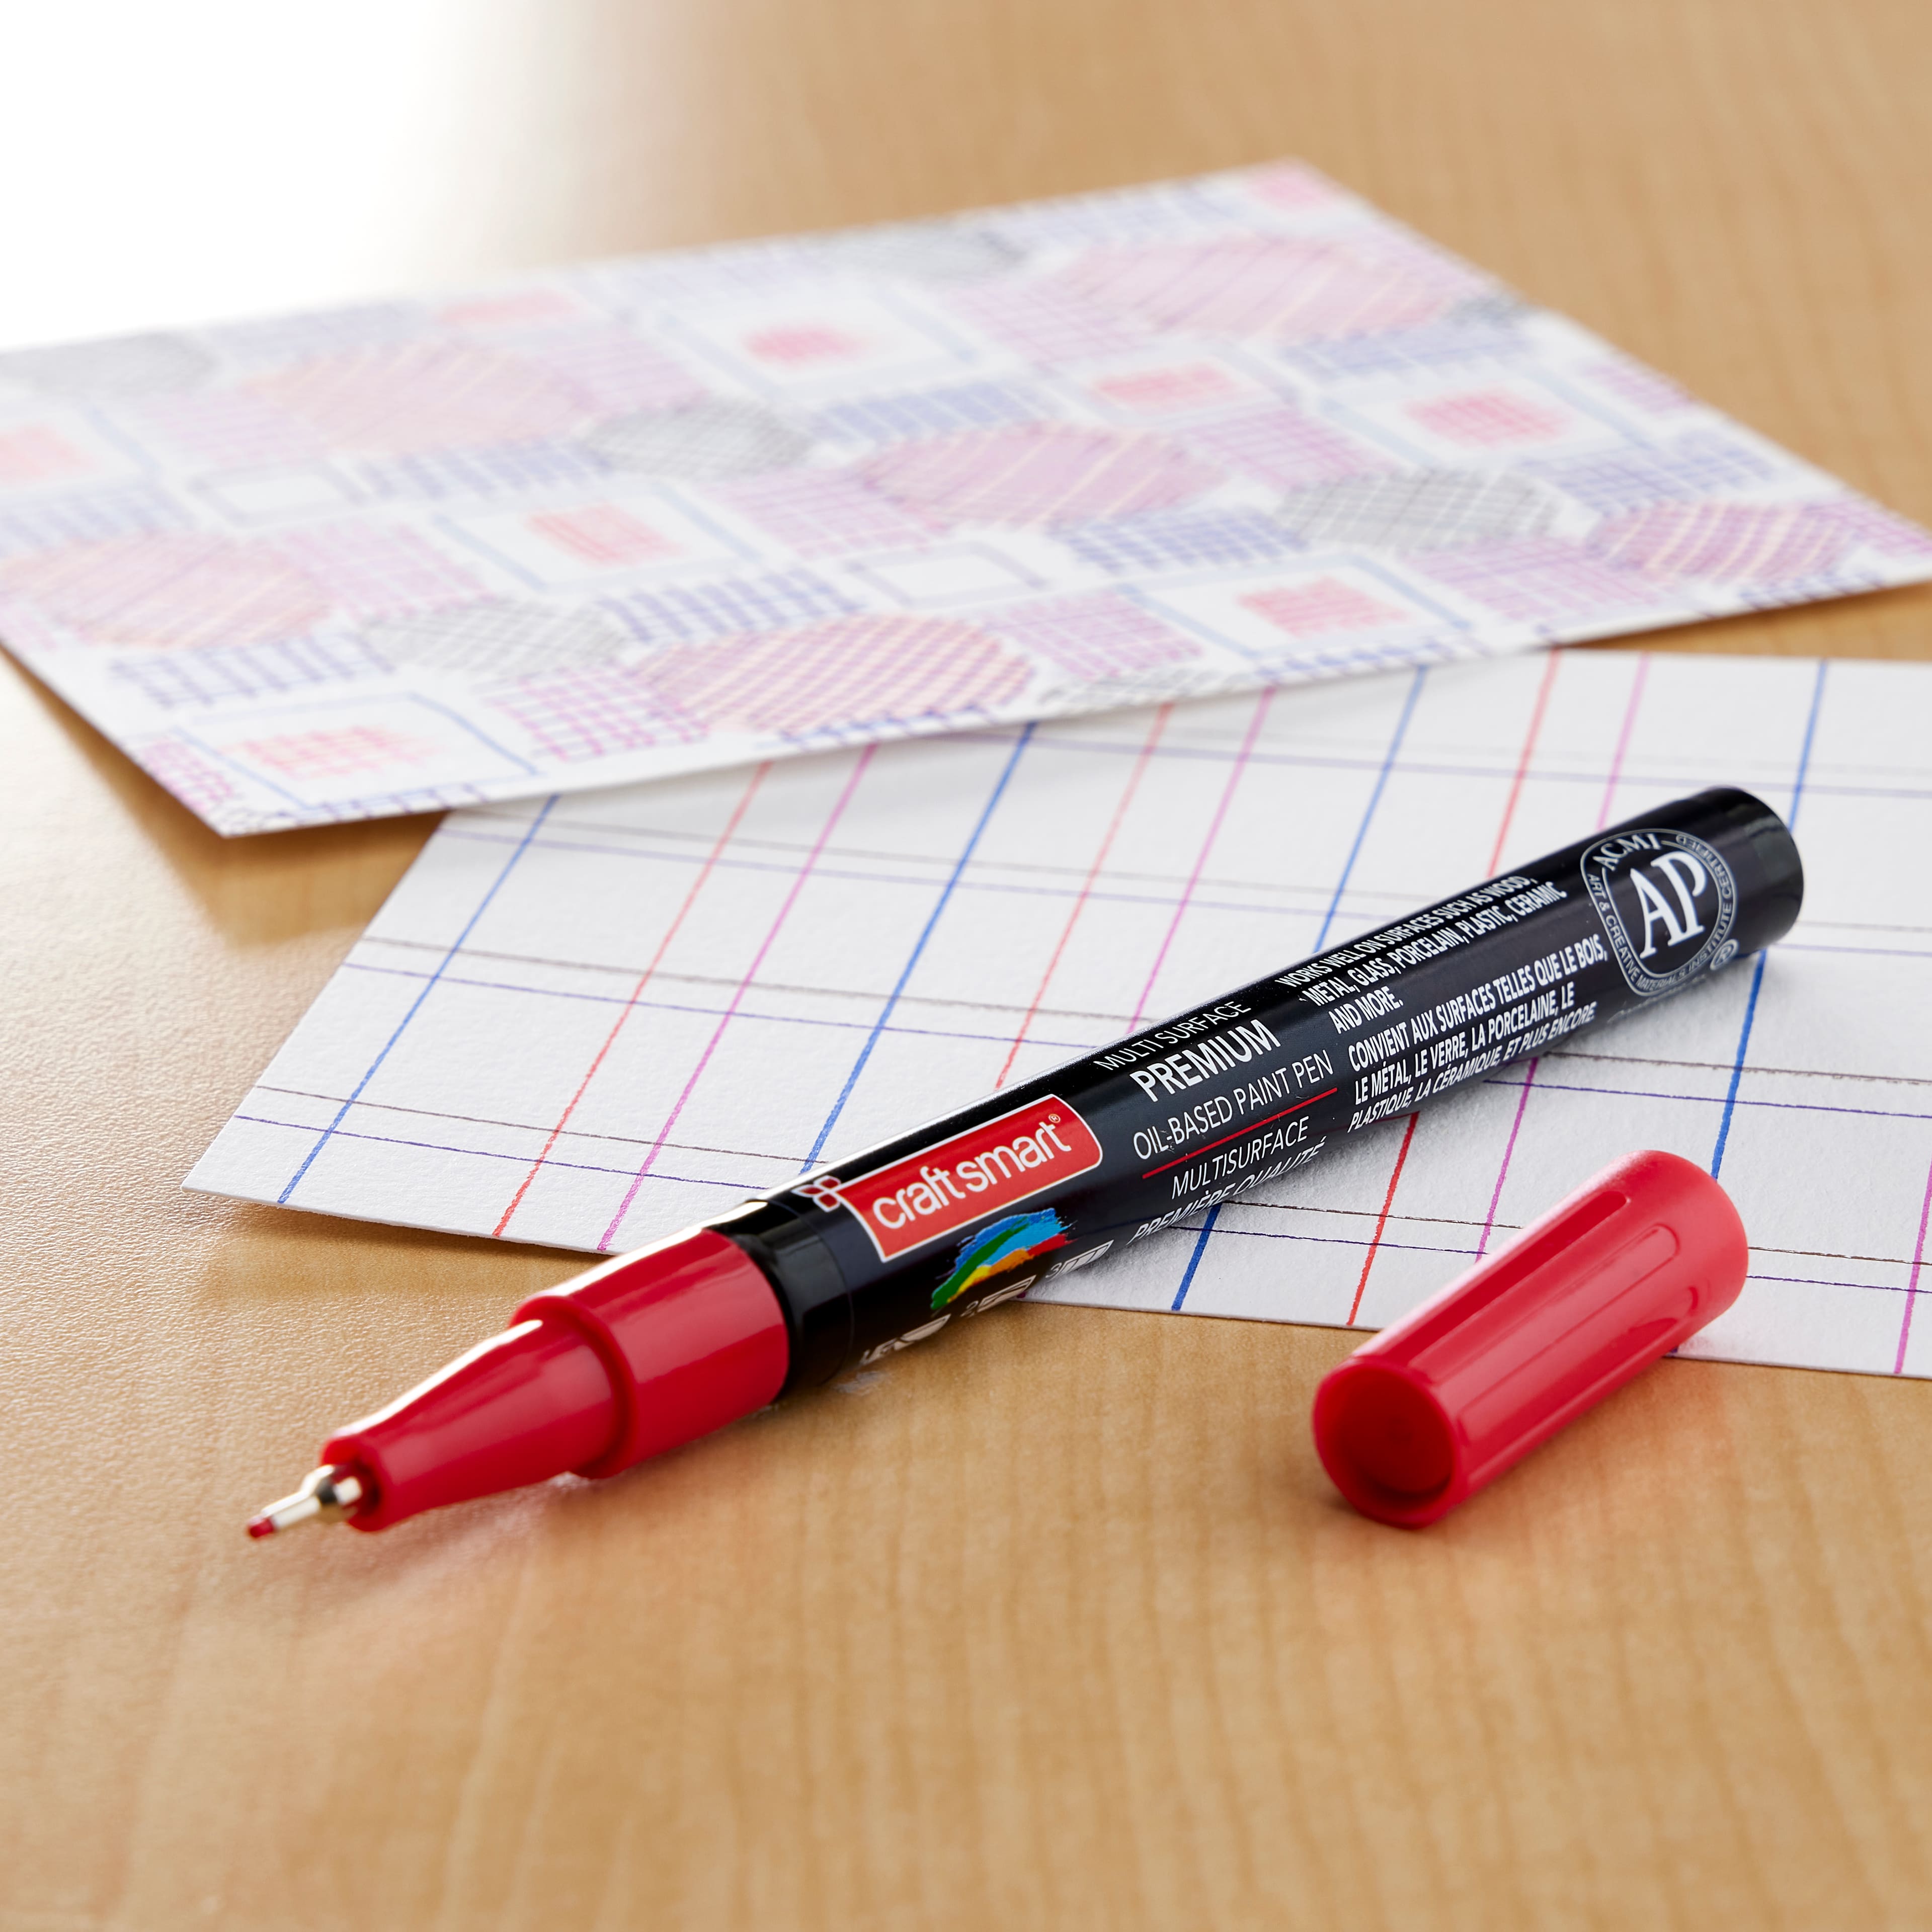 Craft Smart Extra Fine Tip Multi-Surface Premium Paint Pen - Each